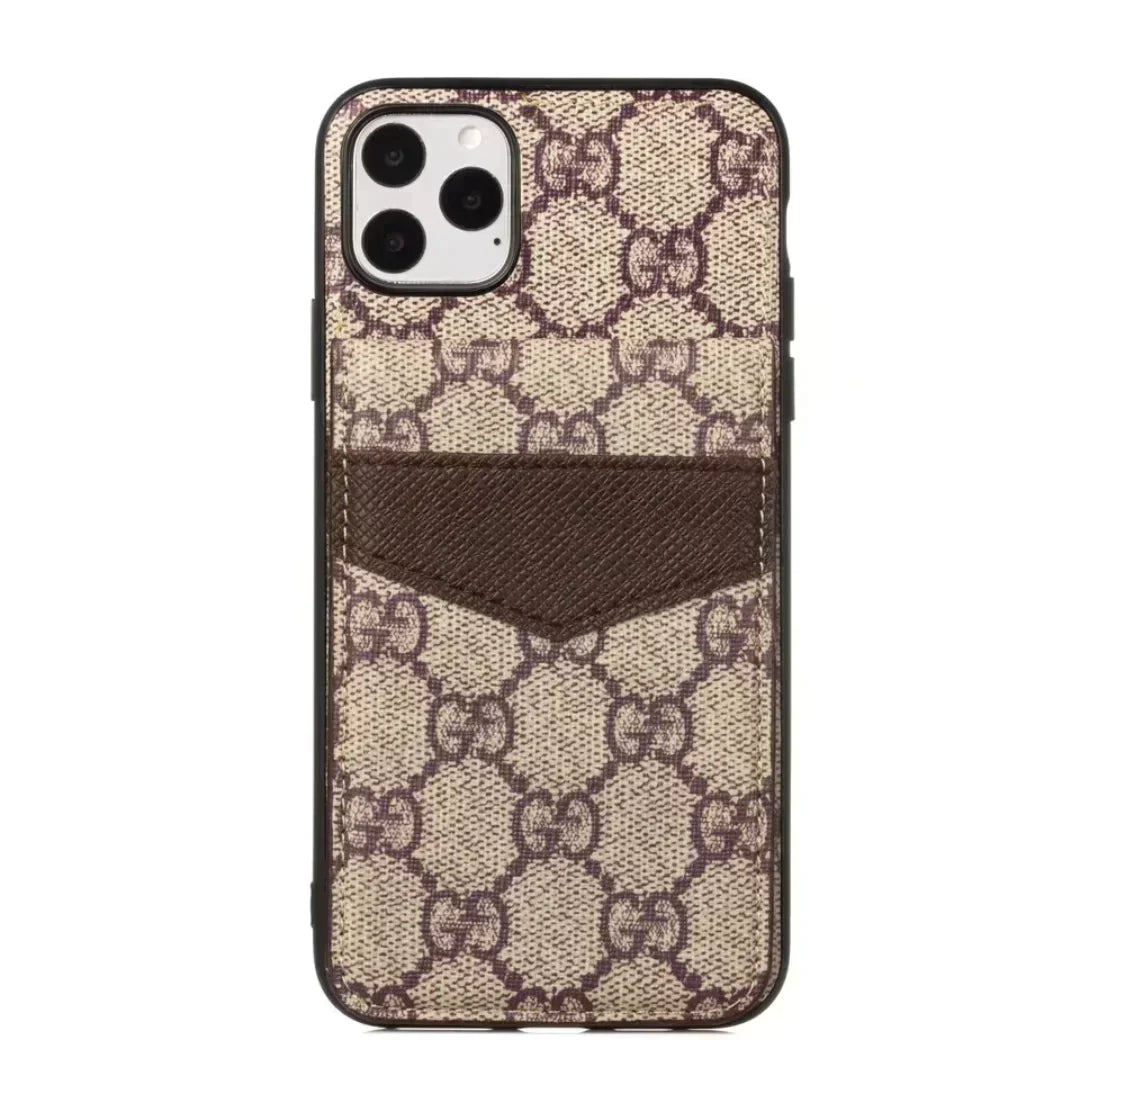 LV\GG iPhone Cases - Glamour Gaurd